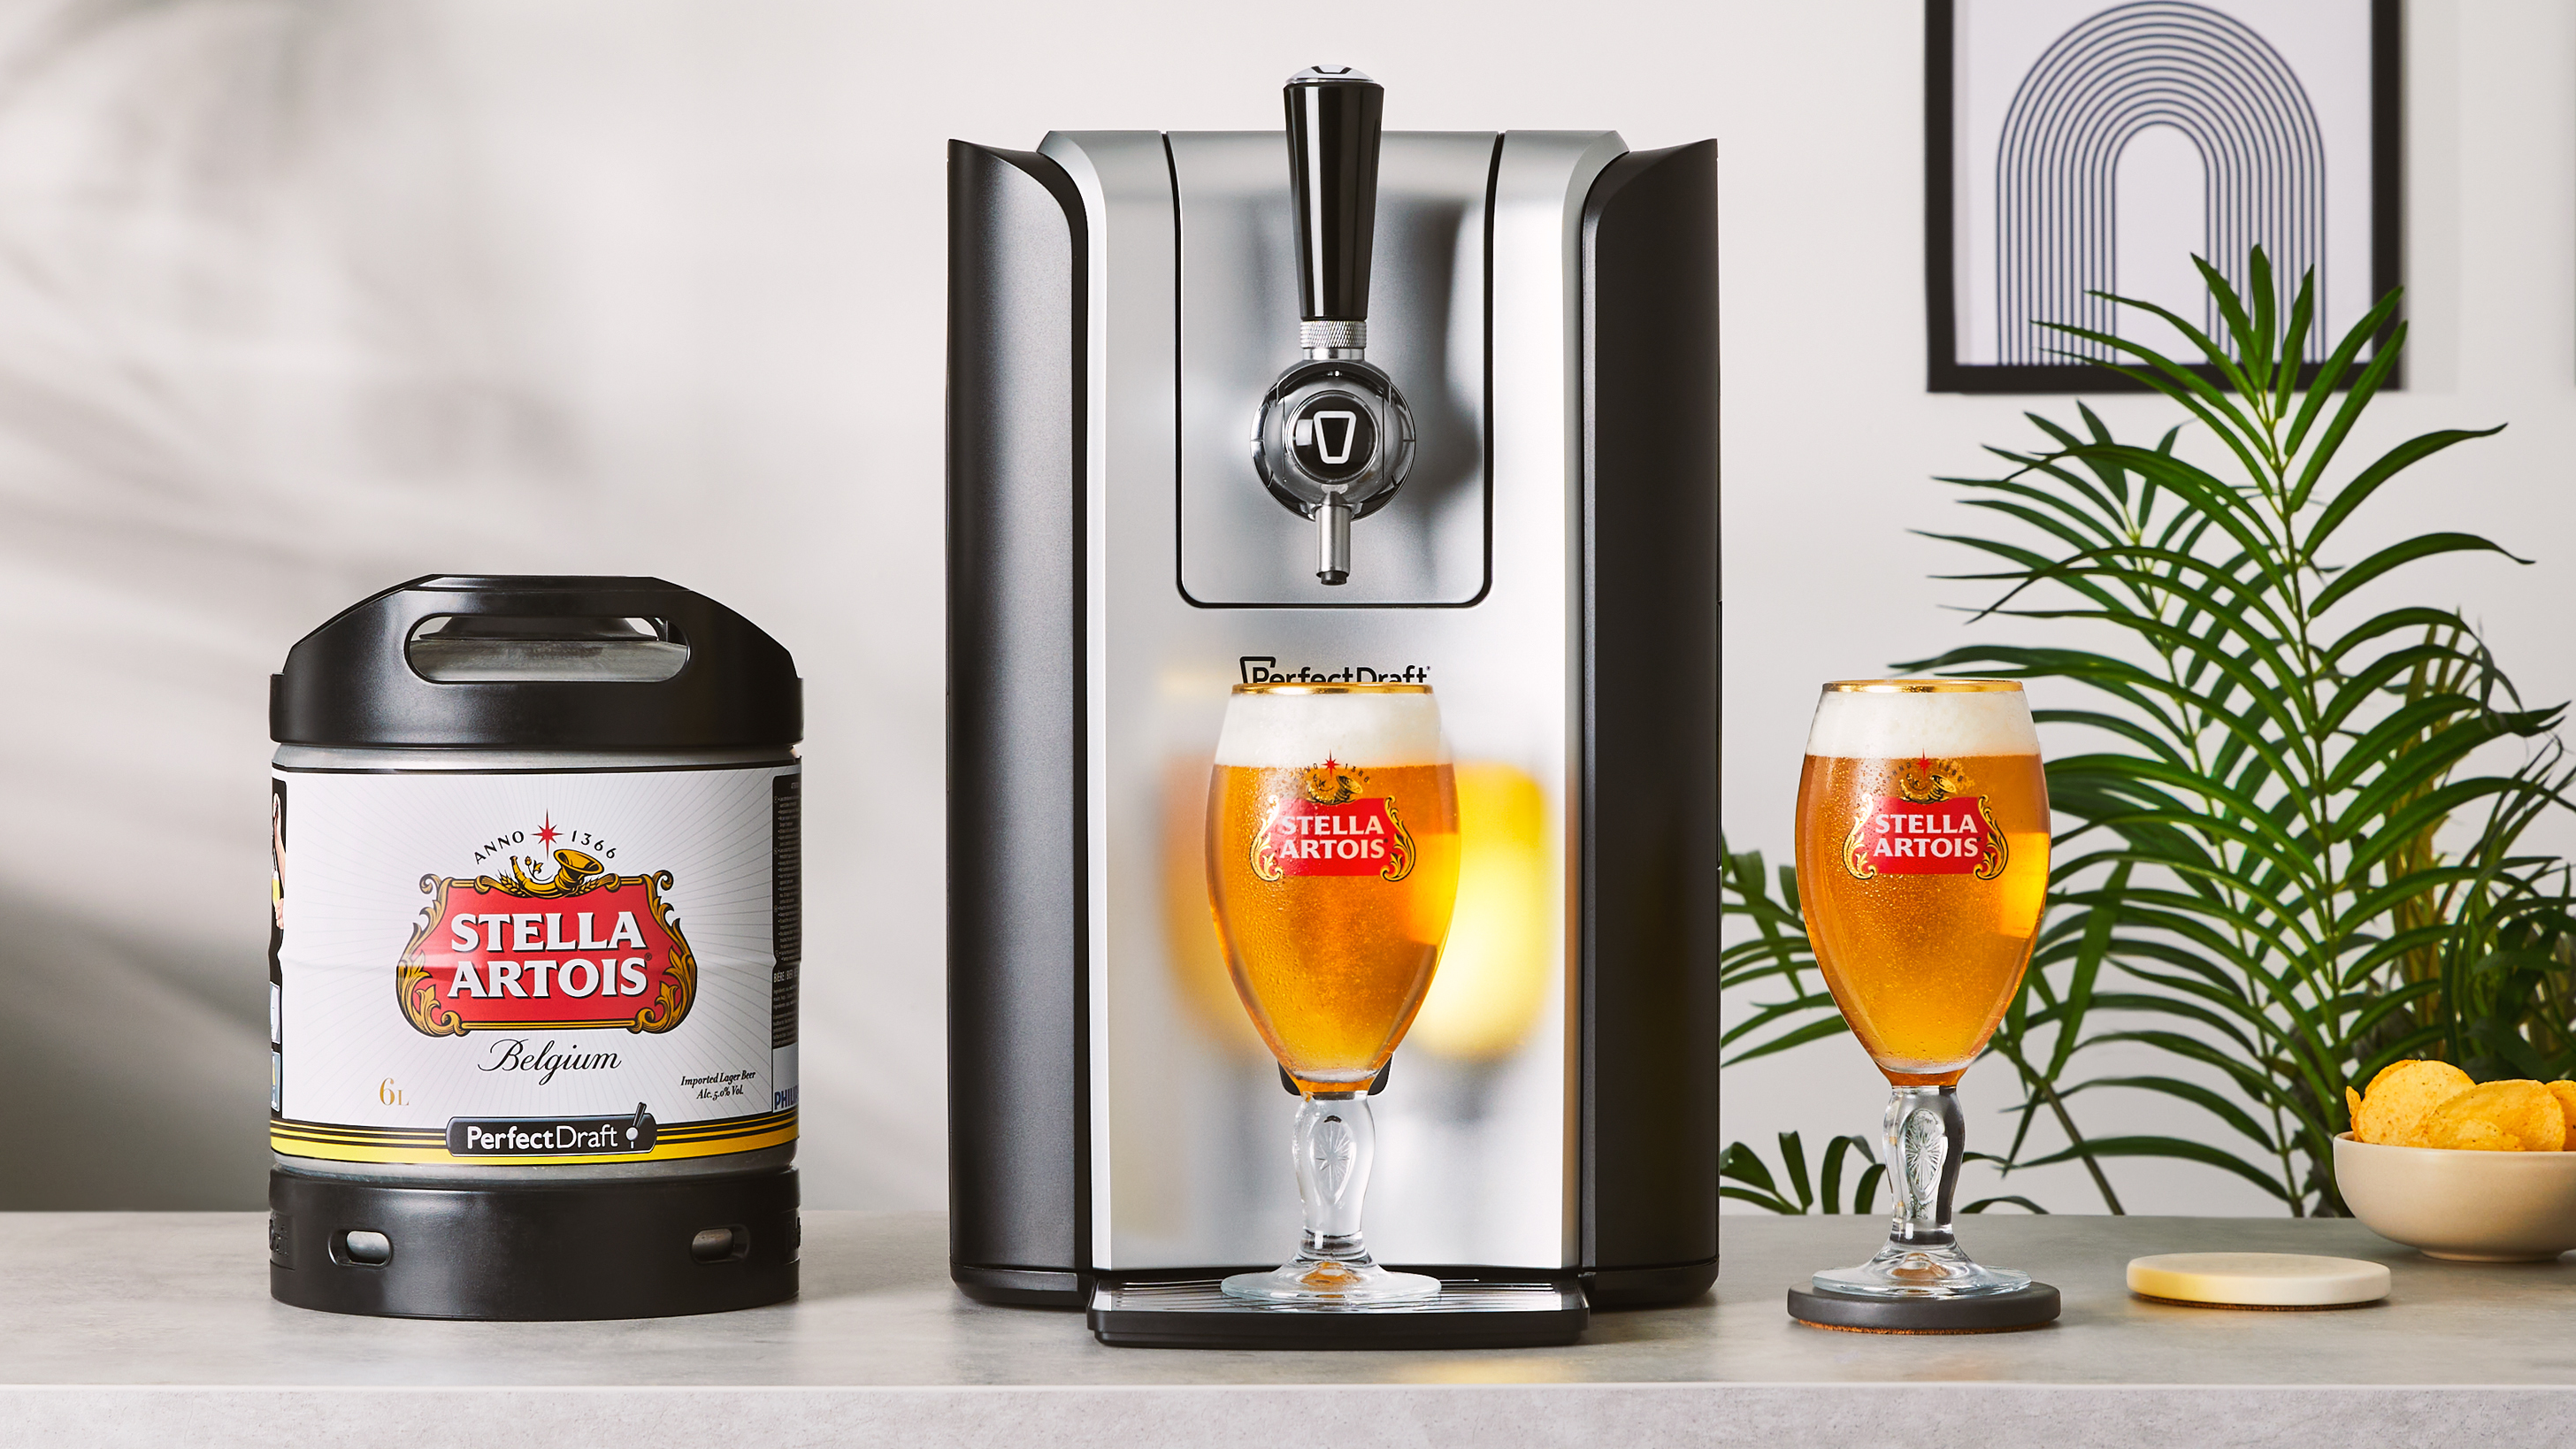 Philips PerfectDraft Draught Beer Dispenser